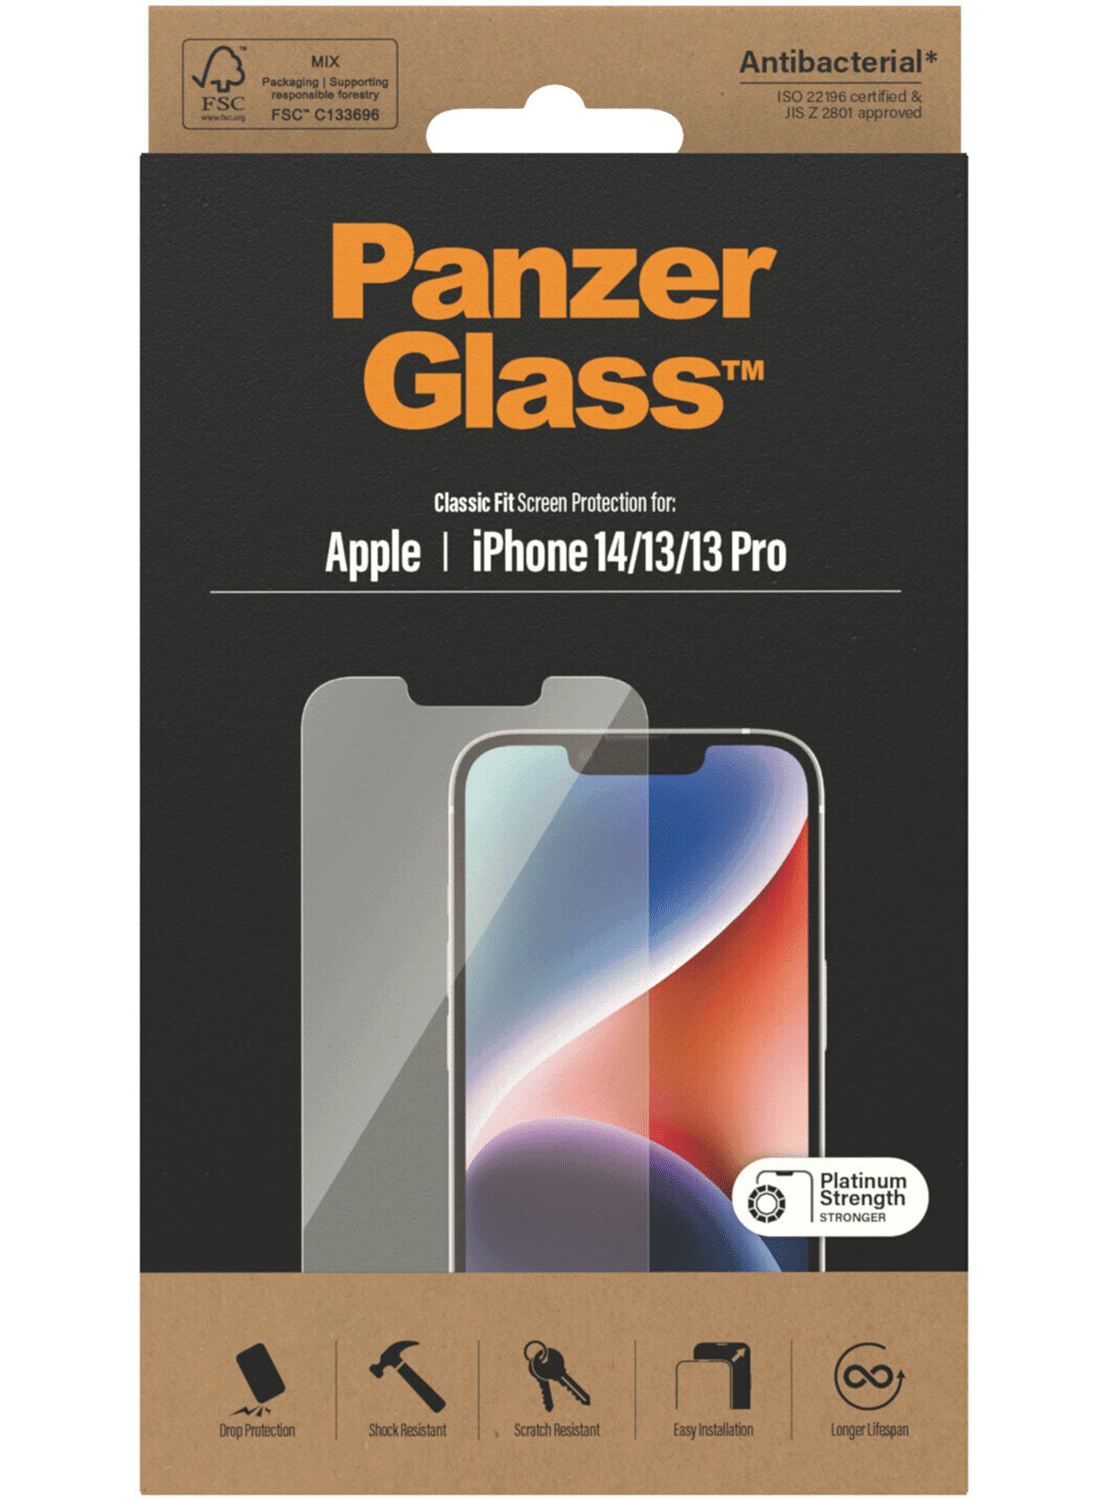 PanzerGlass Antibakteriell Screen Protector iPhone 14 / 13 / 13 Pro - CarbonPhone